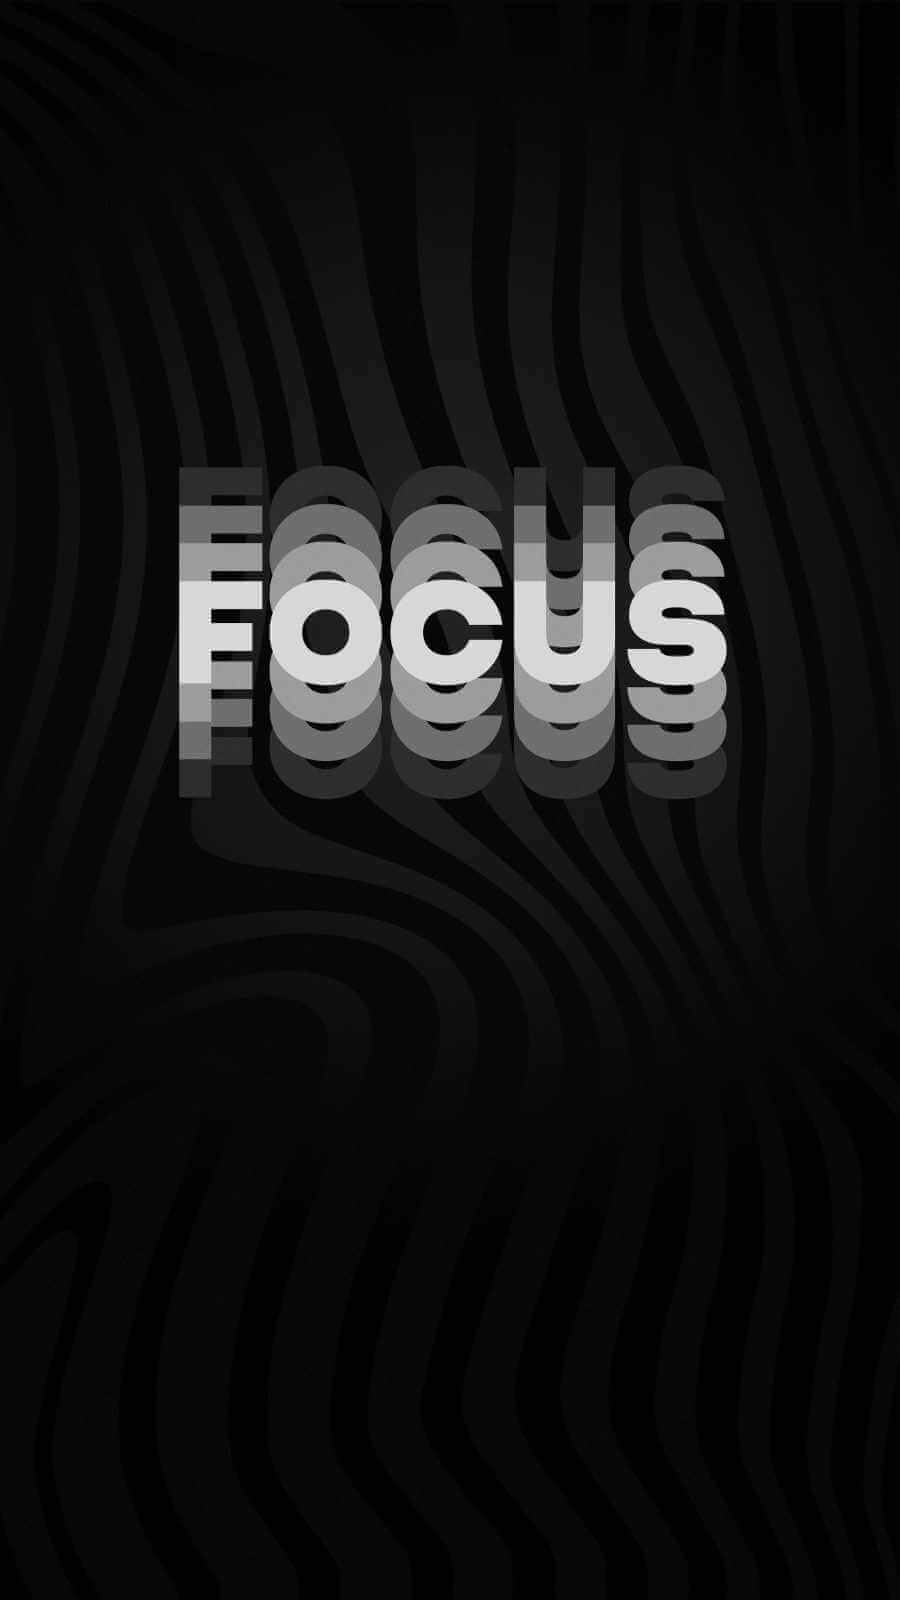 Focus s on